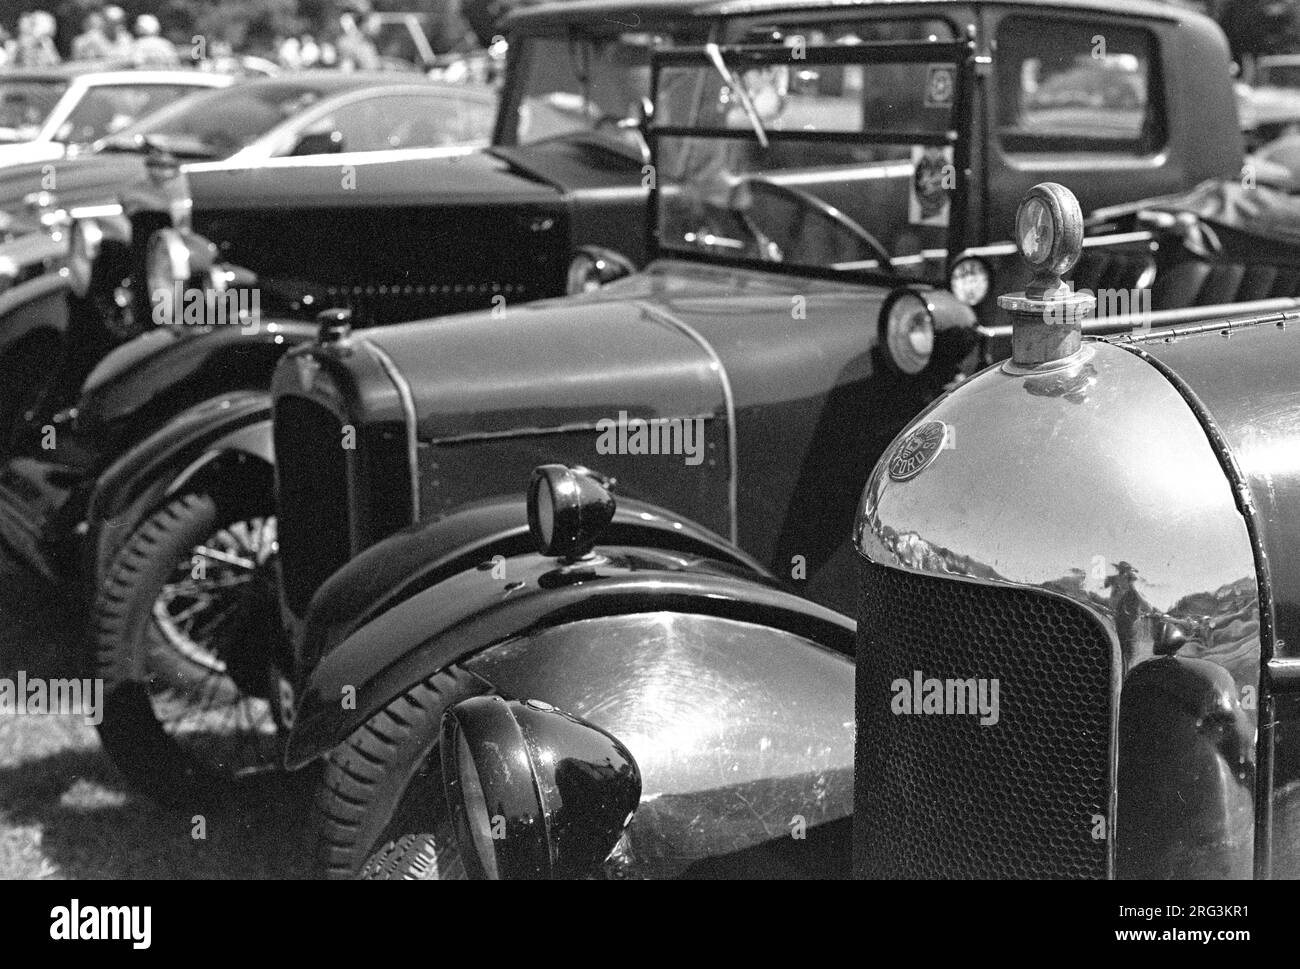 Austin 7 and Morris pre war classic cars Shot on 35mm film Stock Photo